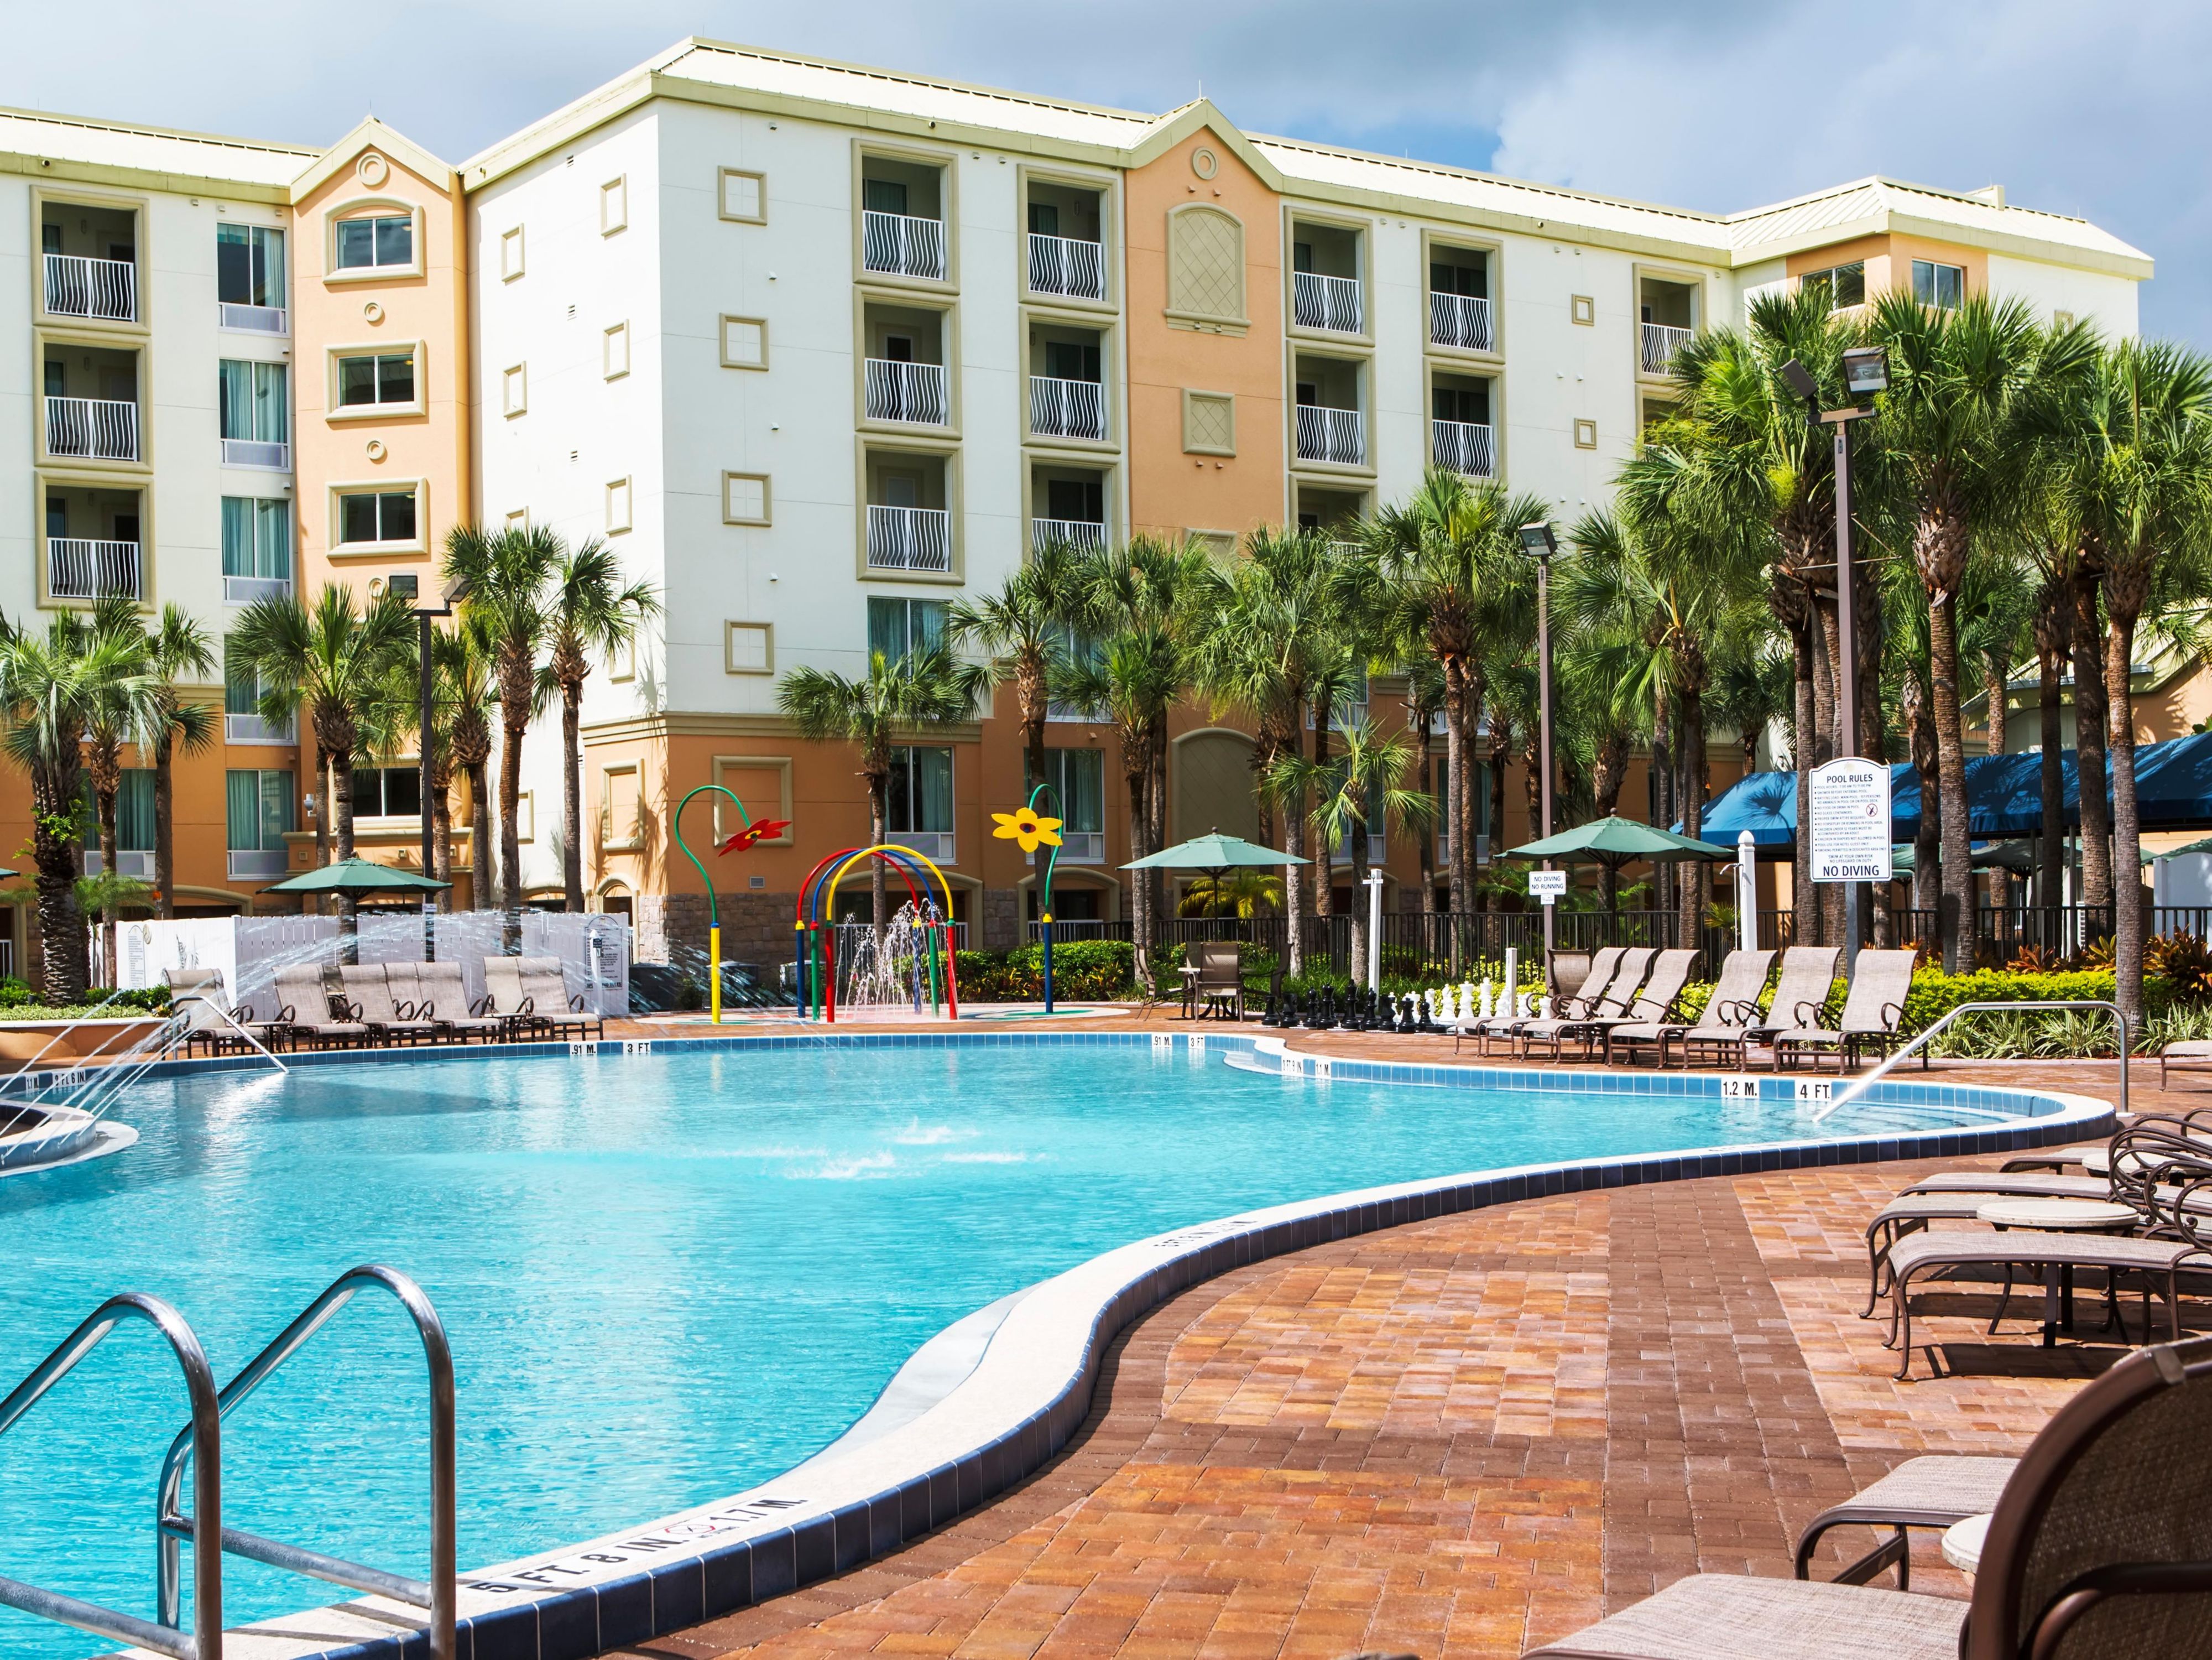 Holiday Inn Resort Orlando 3535413509 4x3